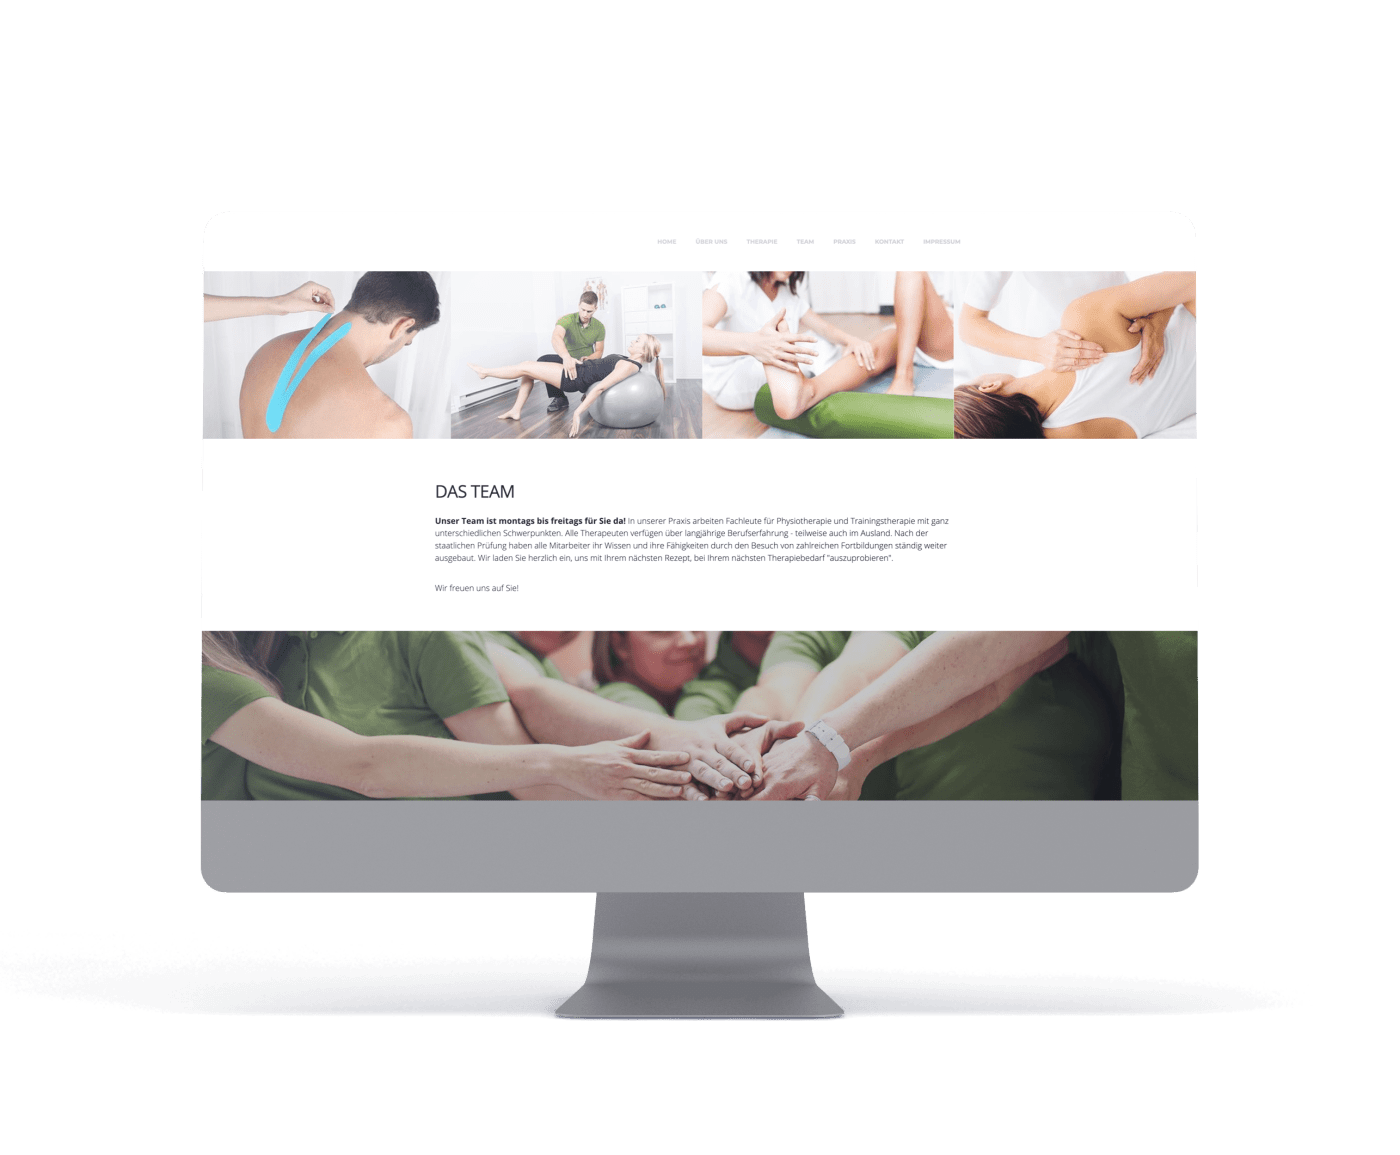 Physiotherapie Website